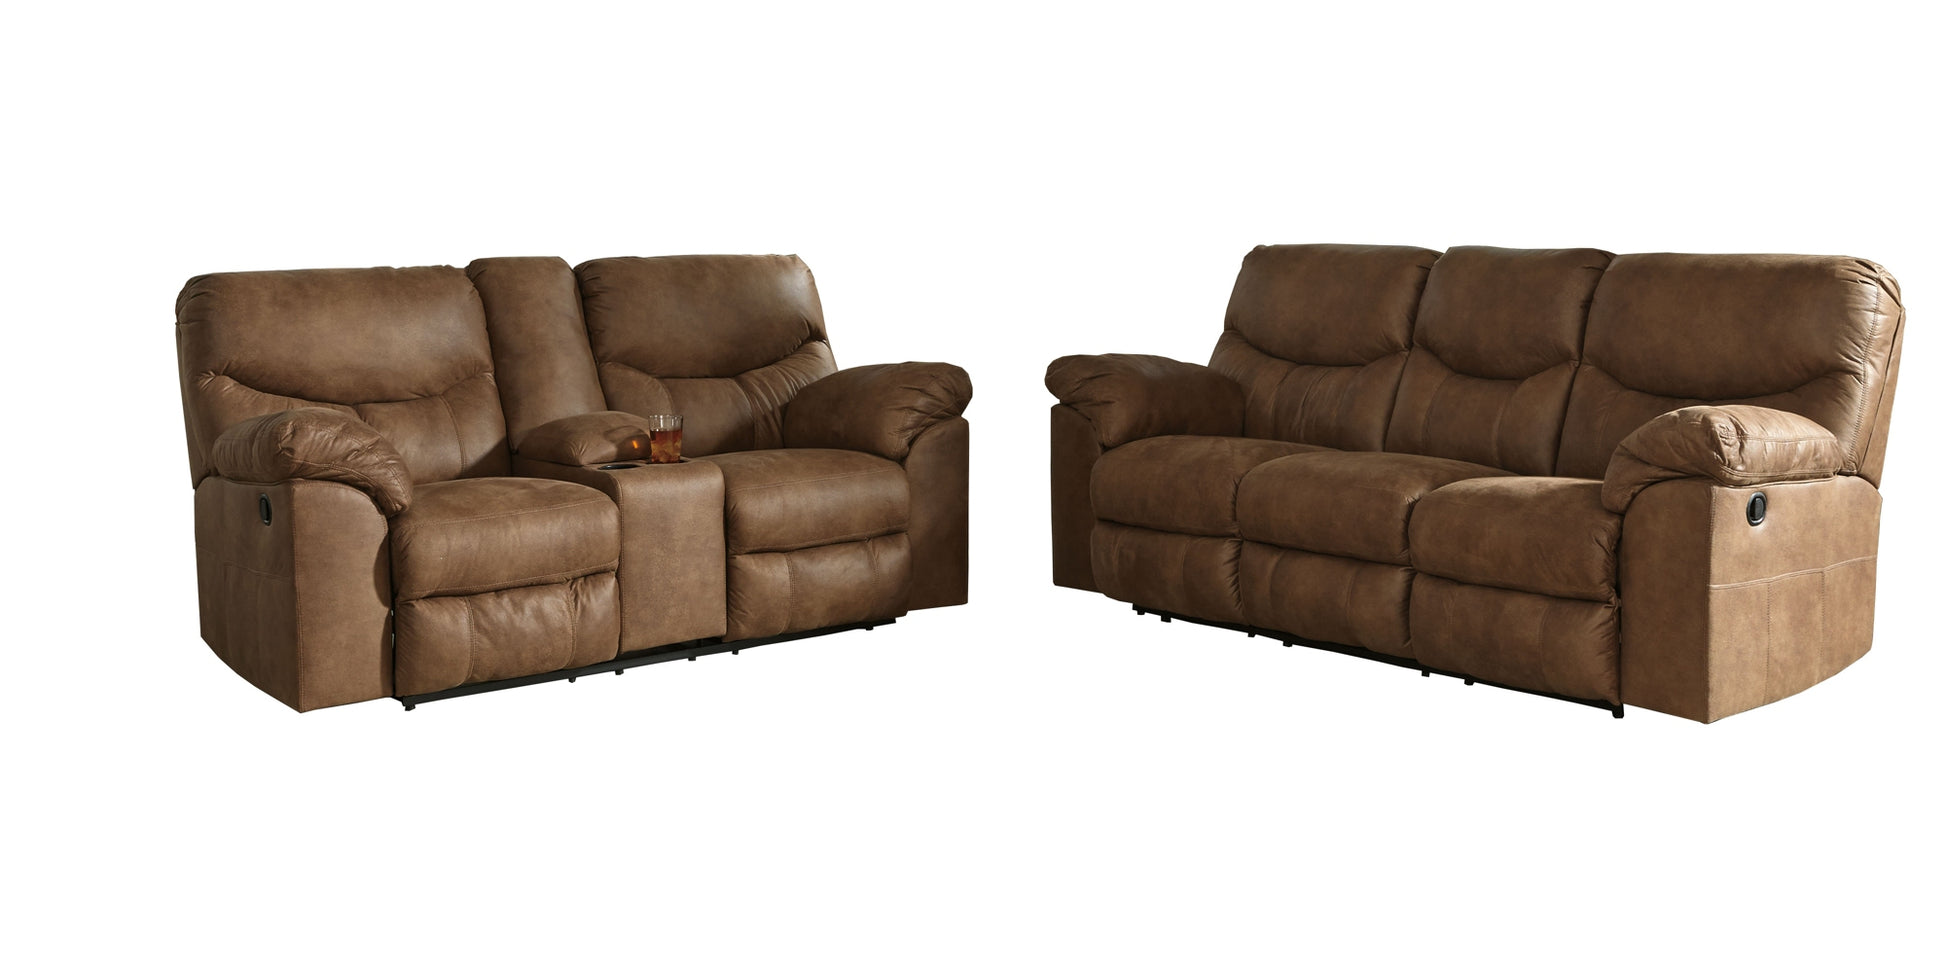 Boxberg Sofa and Loveseat JB's Furniture  Home Furniture, Home Decor, Furniture Store